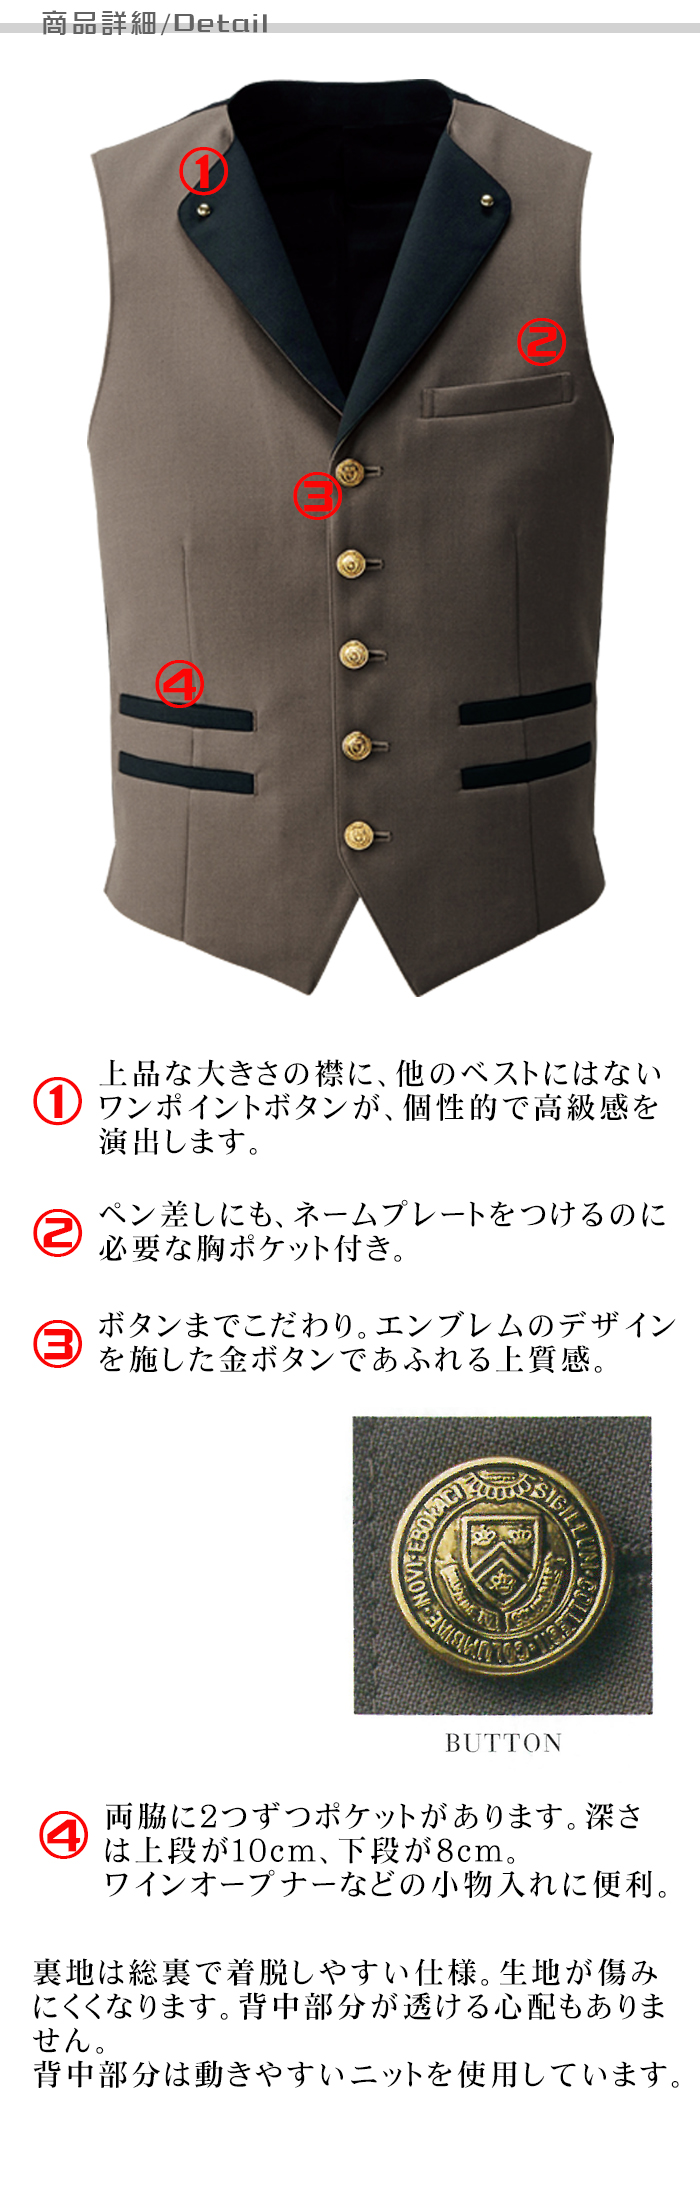 TEP702 業務用制服　襟付きフォーマルベスト(男)高級感があり個性的なデザイン金ボタン付き 詳細商品説明